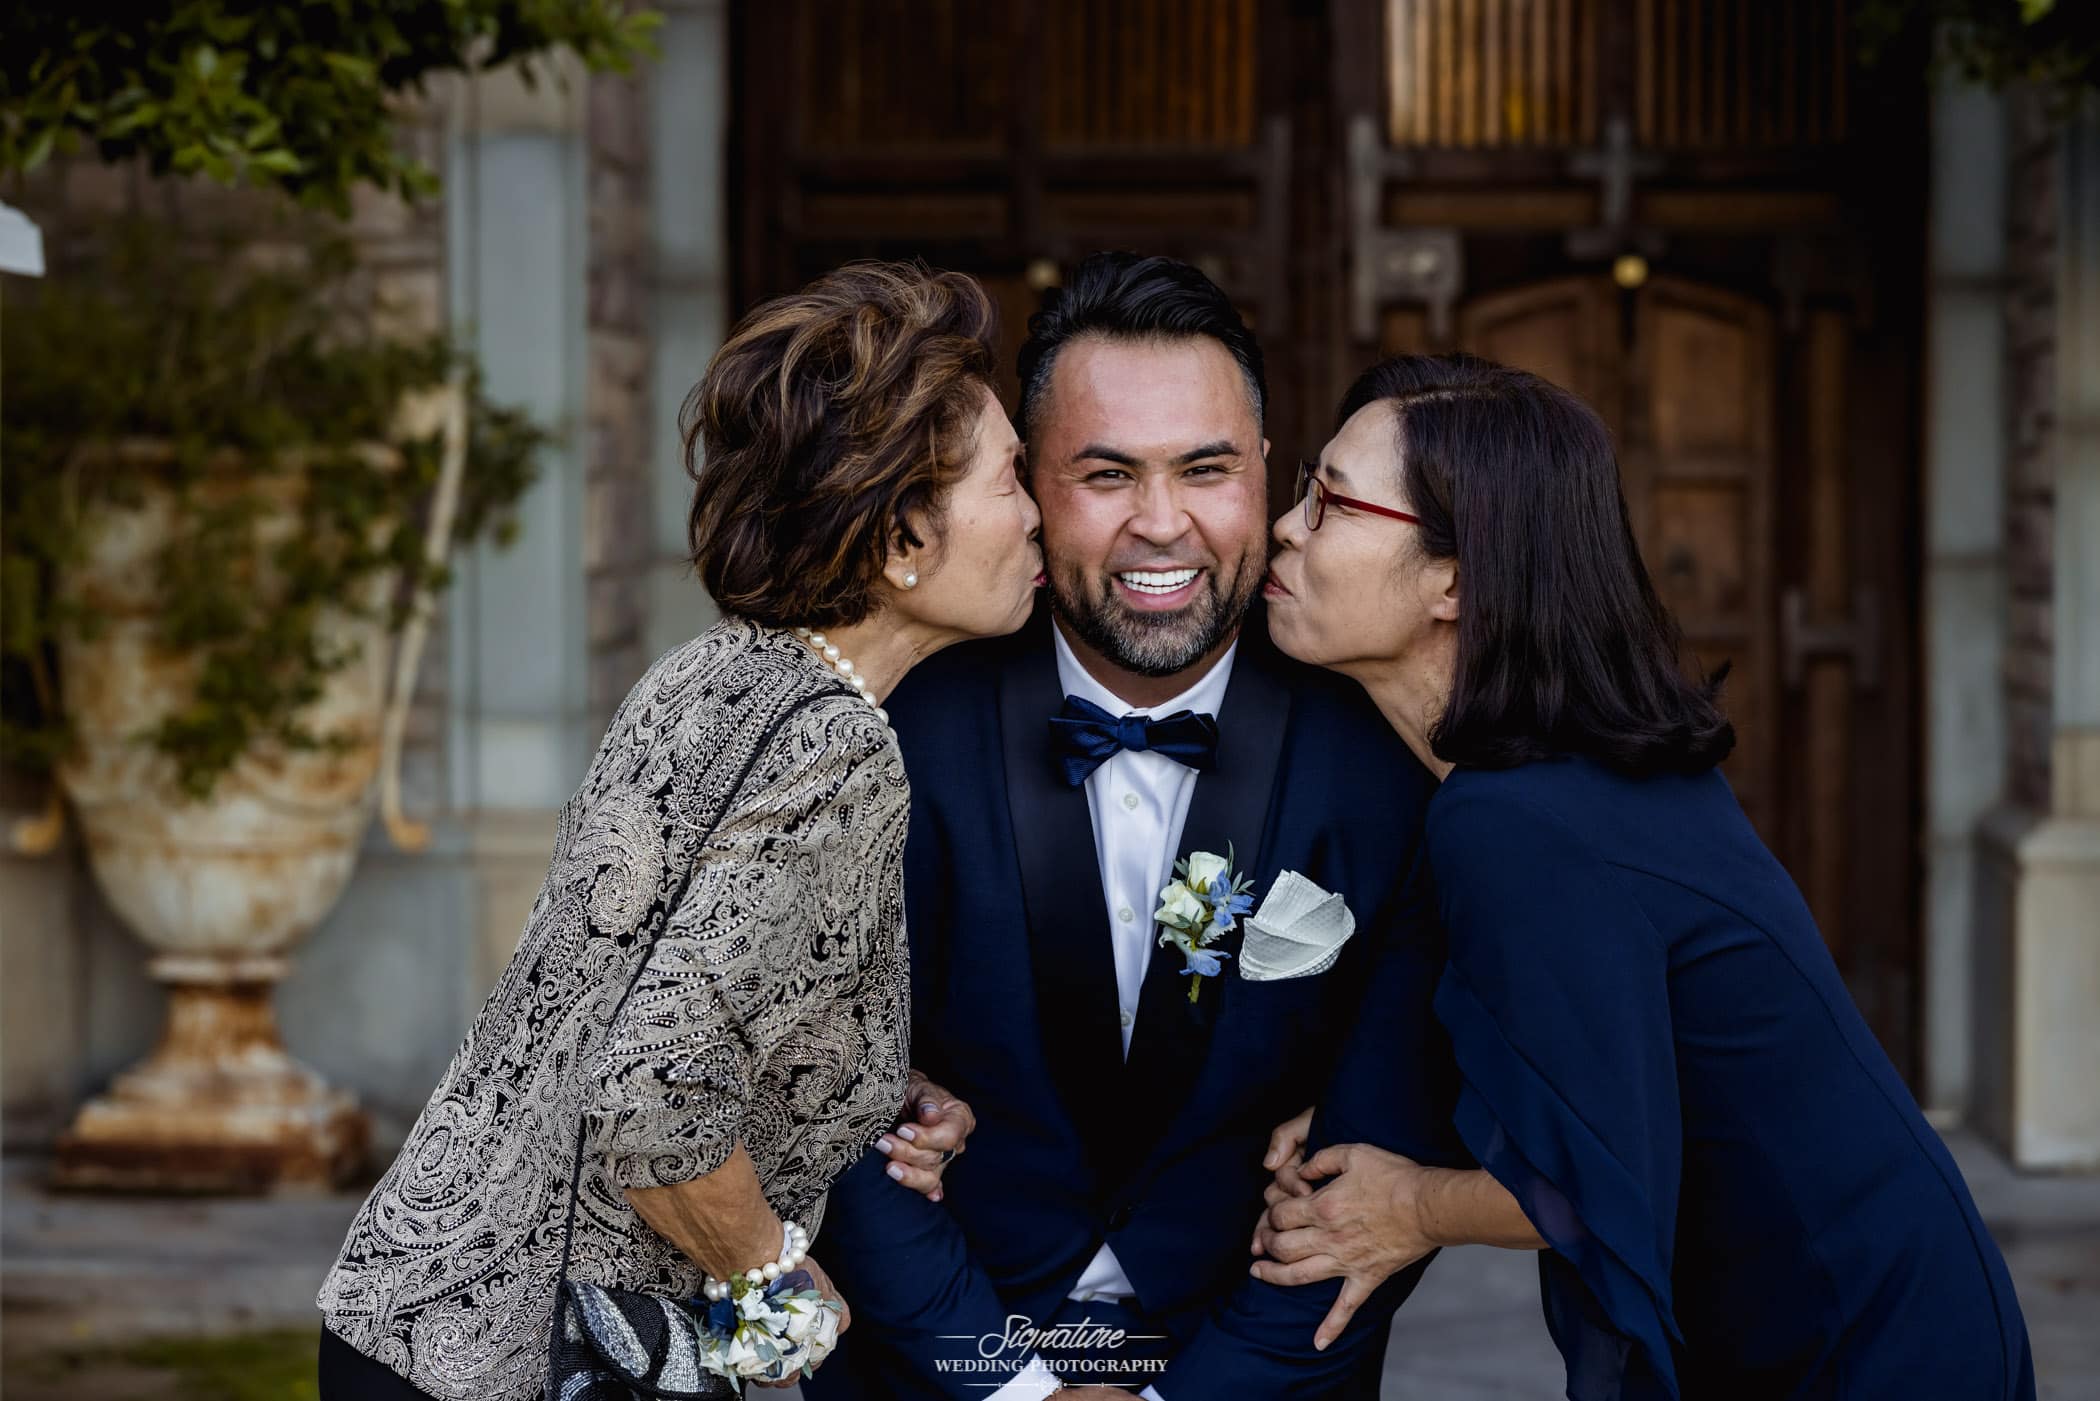 Moms kissing groom's cheeks